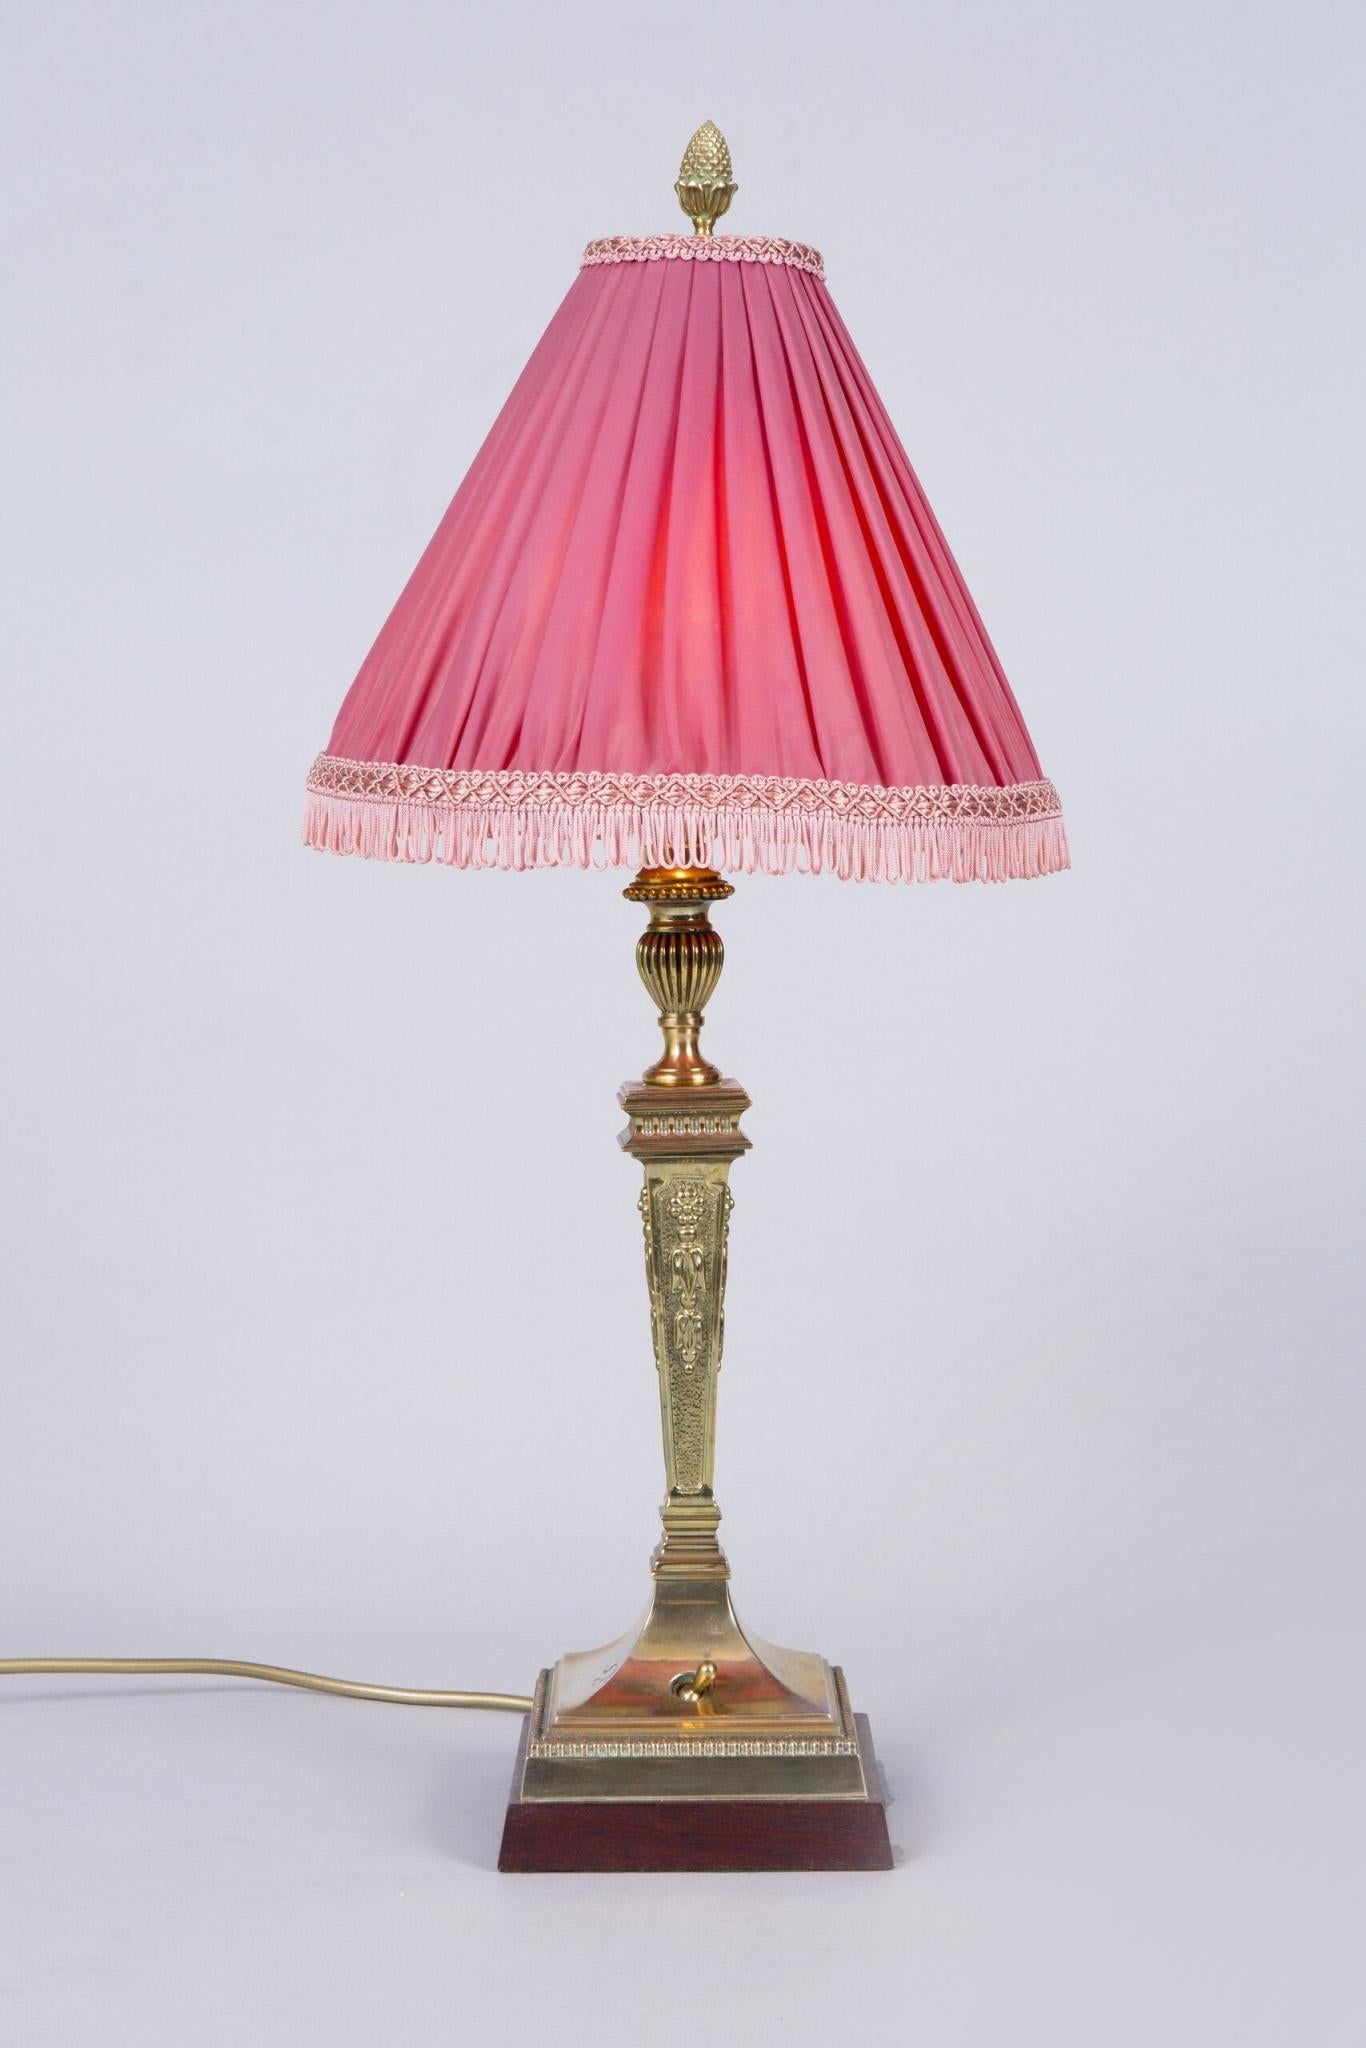 Empire French Lamp, 19th Century, Original Condition, Period 1890-1899